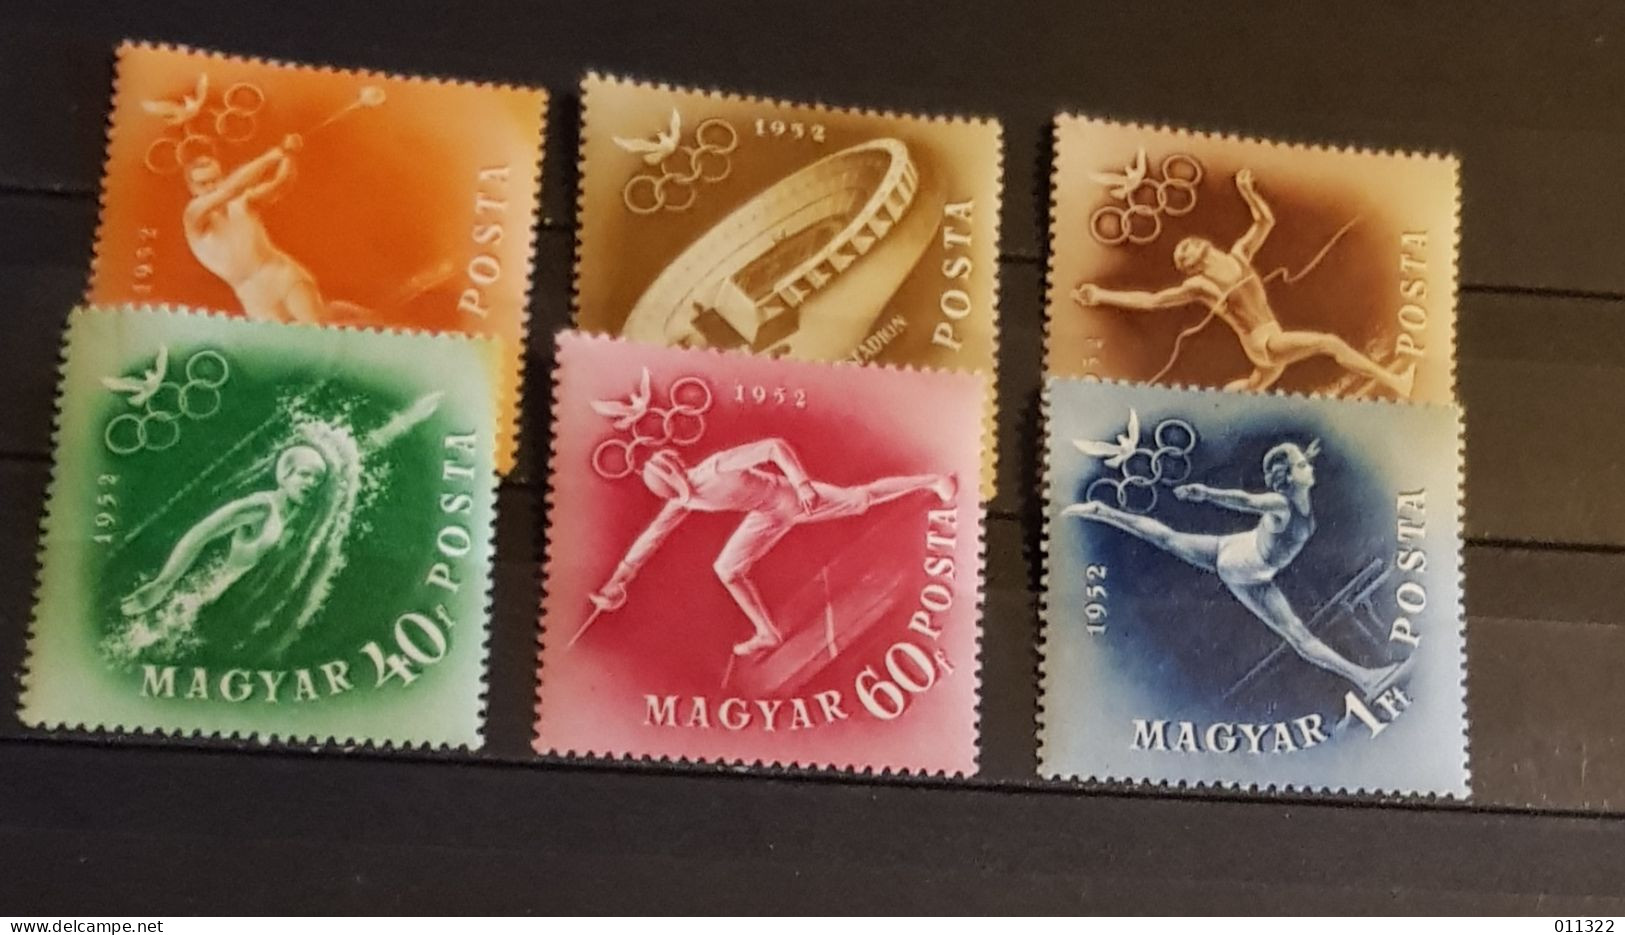 HUNGARY OLYMPIC GAMES HELSINKI SET MNH - Ete 1952: Helsinki